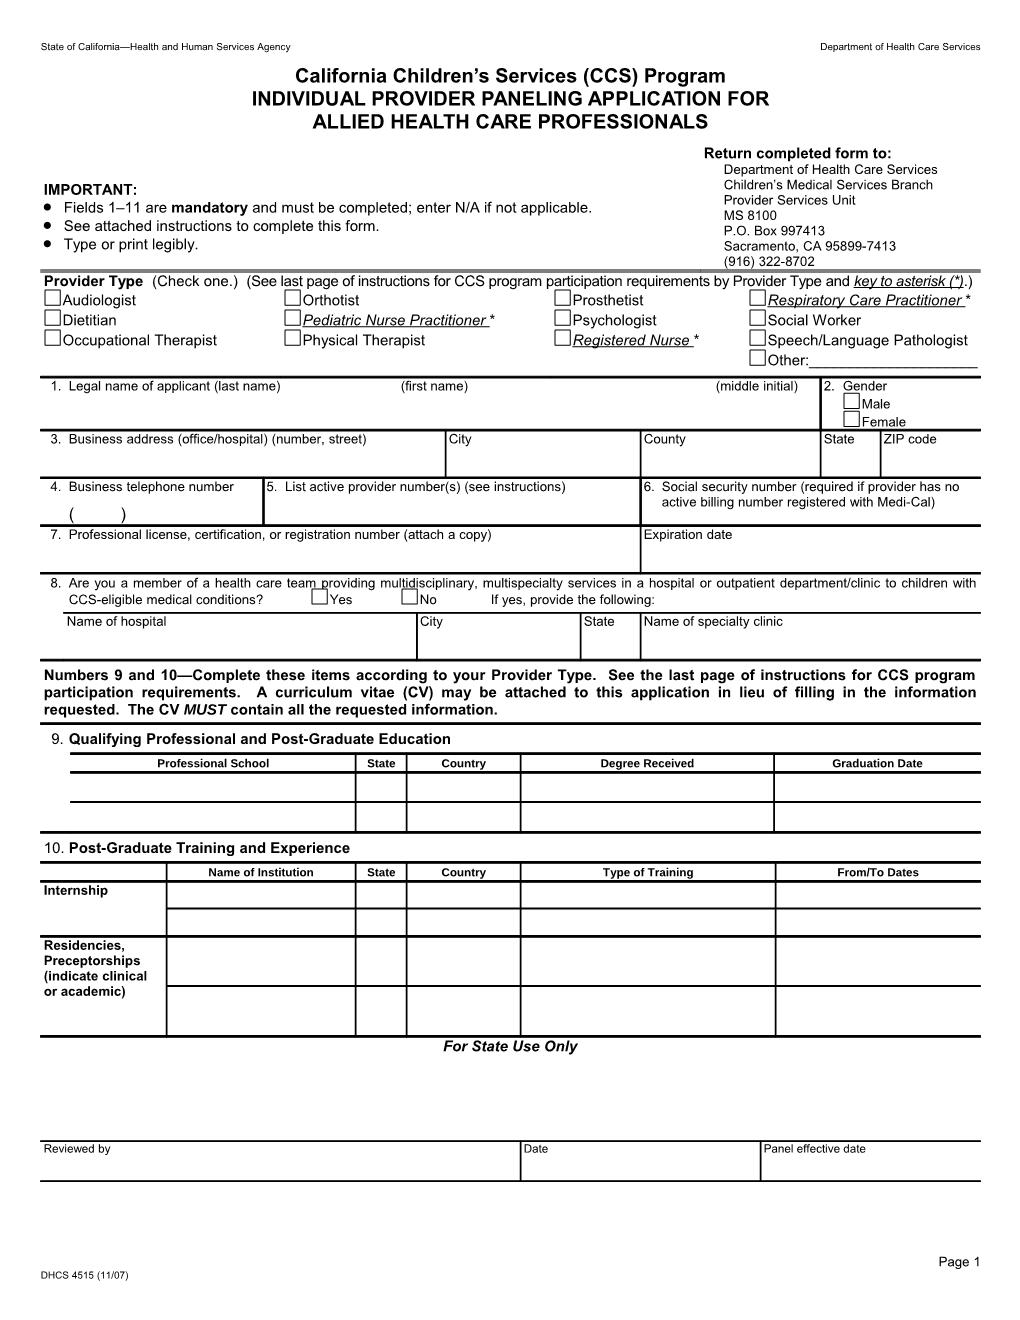 Form: California Children S Services (CCS) Program Individual Provider Paneling Application